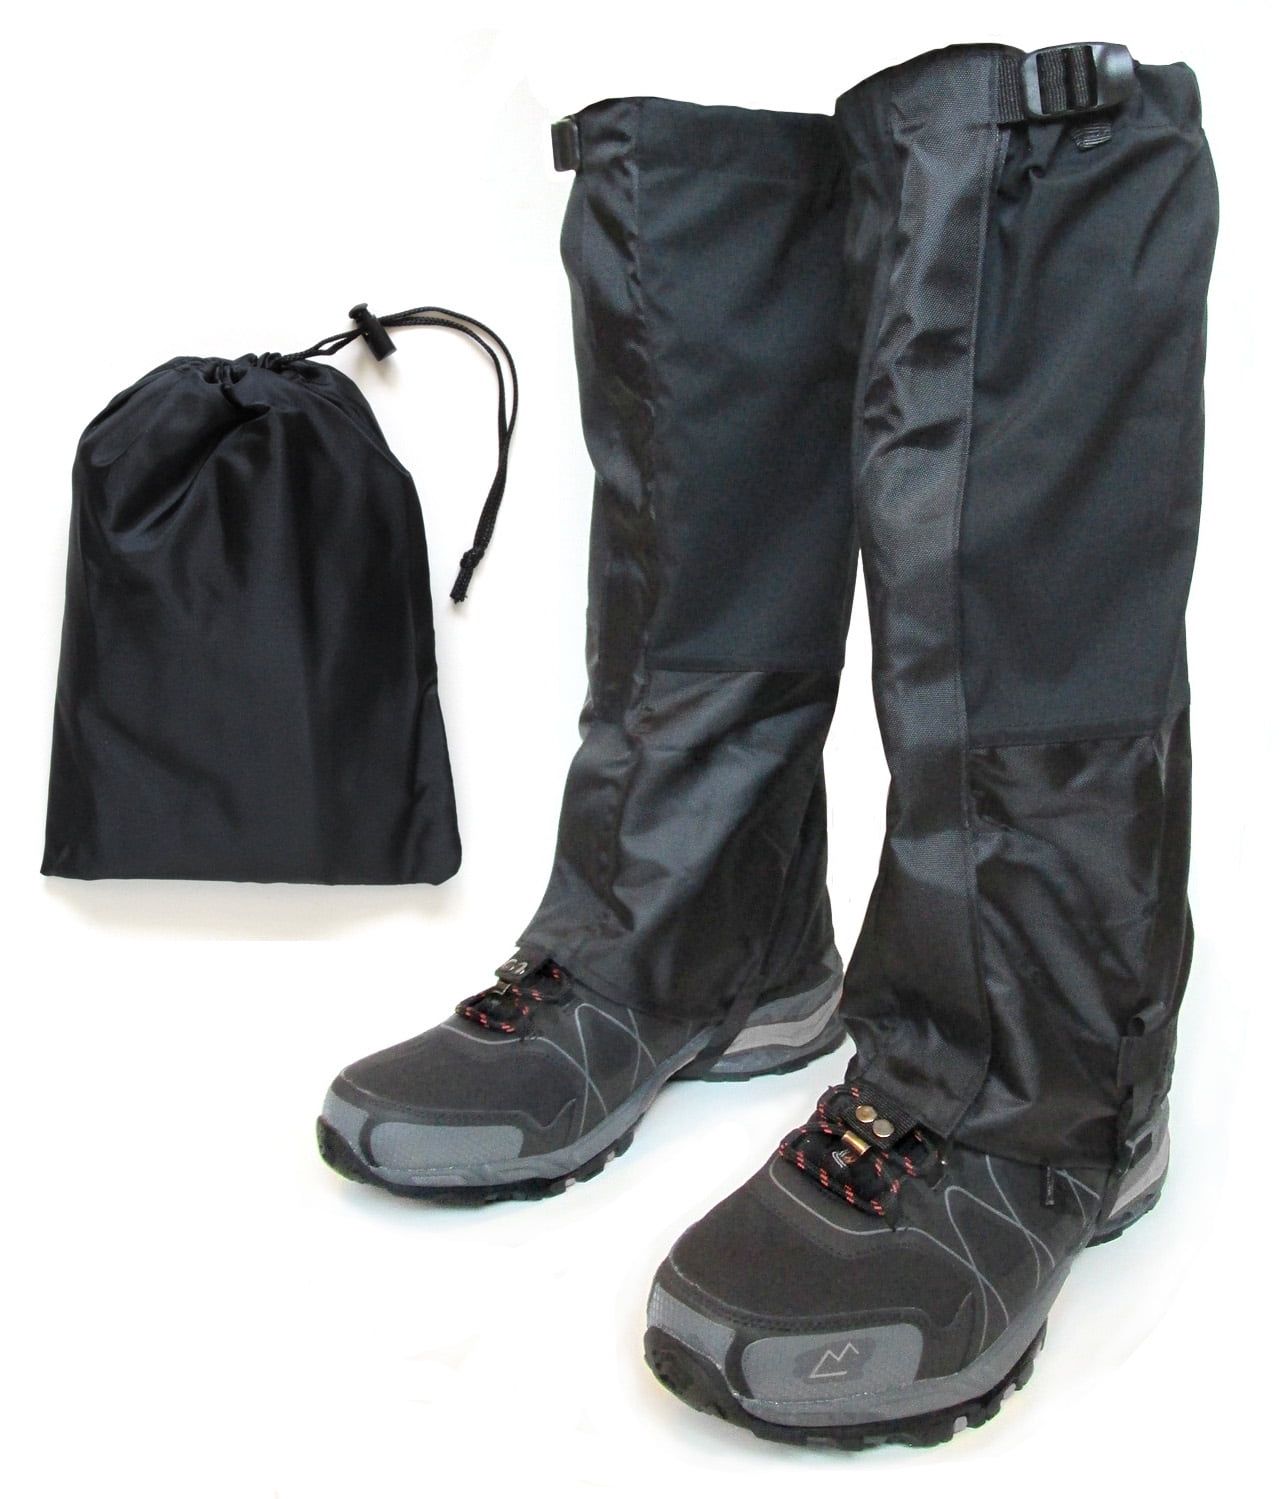 Black YSHTAN Outdoor Gaiters Other Sports Equipment Protective Sleeve 2Pcs Waterproof Nylon Legging Gaiters Outdoor Trekking Walking Leg Cover Guard 